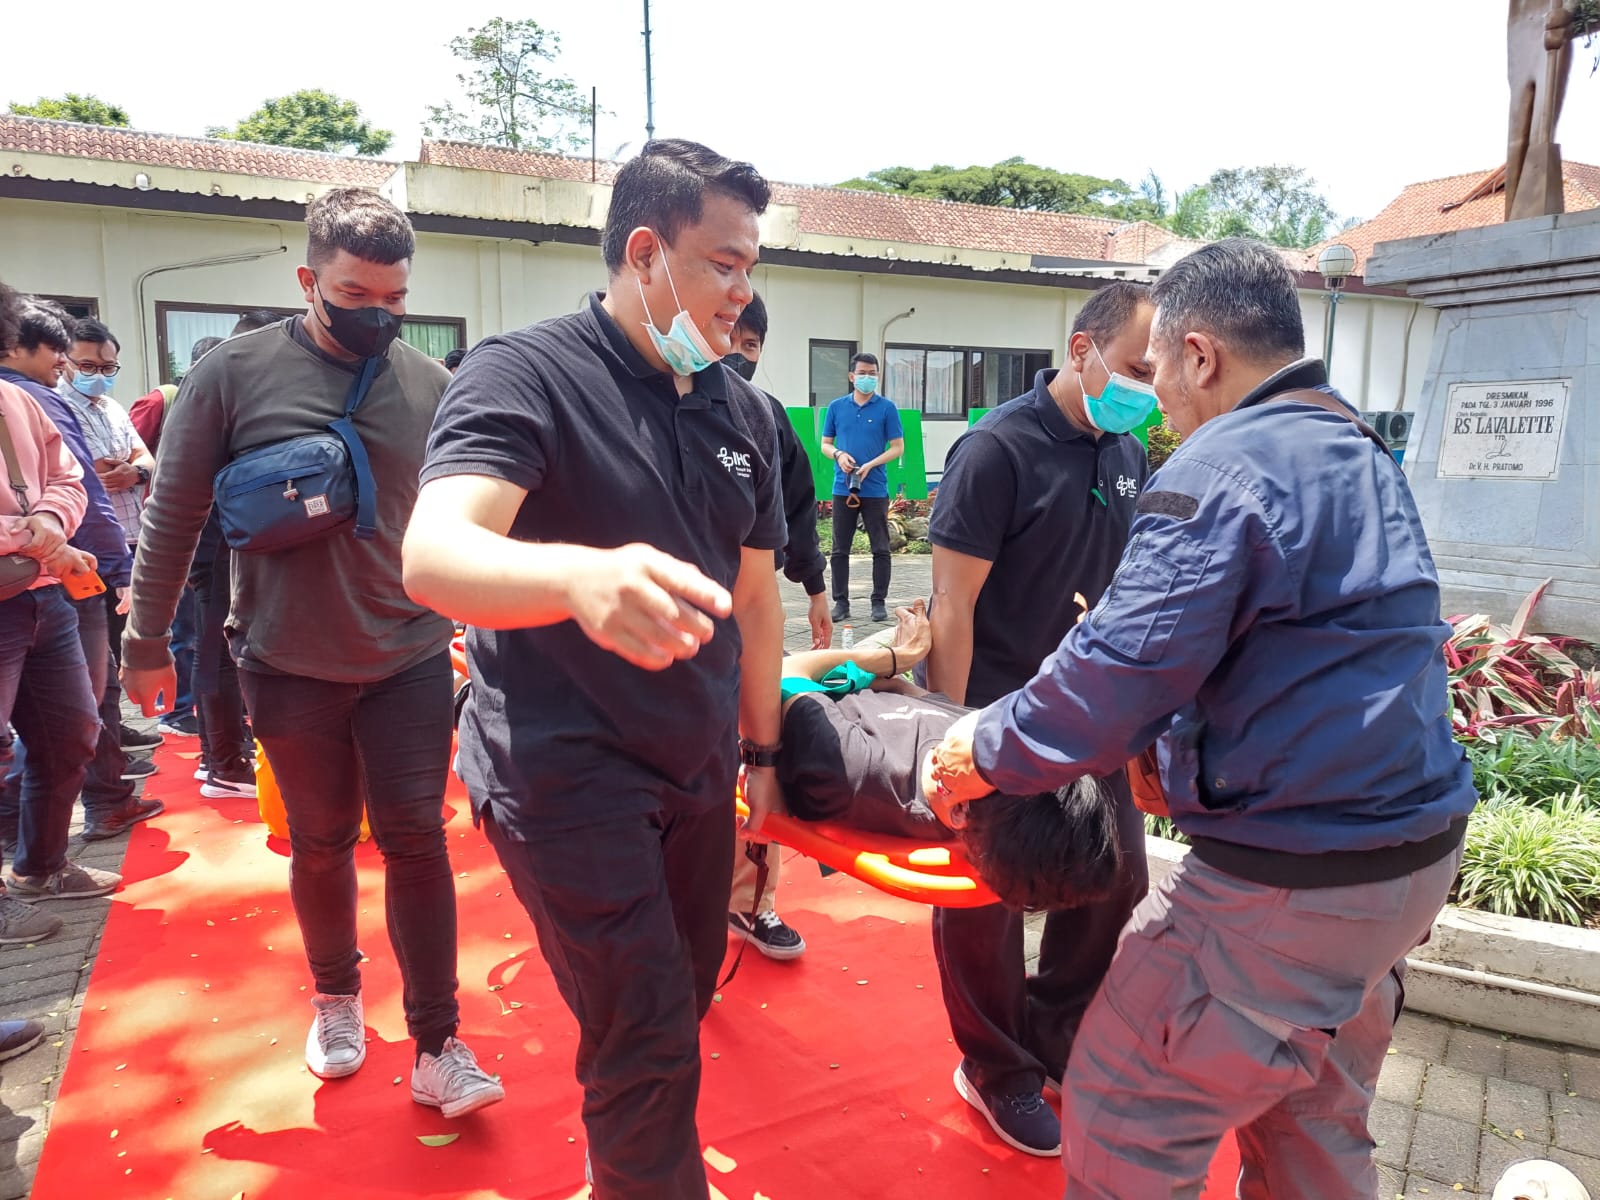 Praktek pelatihan dasar pertolongan pertama kedaruratan yang digelar IHC RS Lavalette bersama PWI Malang Raya di ikuti puluhan wartawan wilayah Malang Raya (ft.cholil)